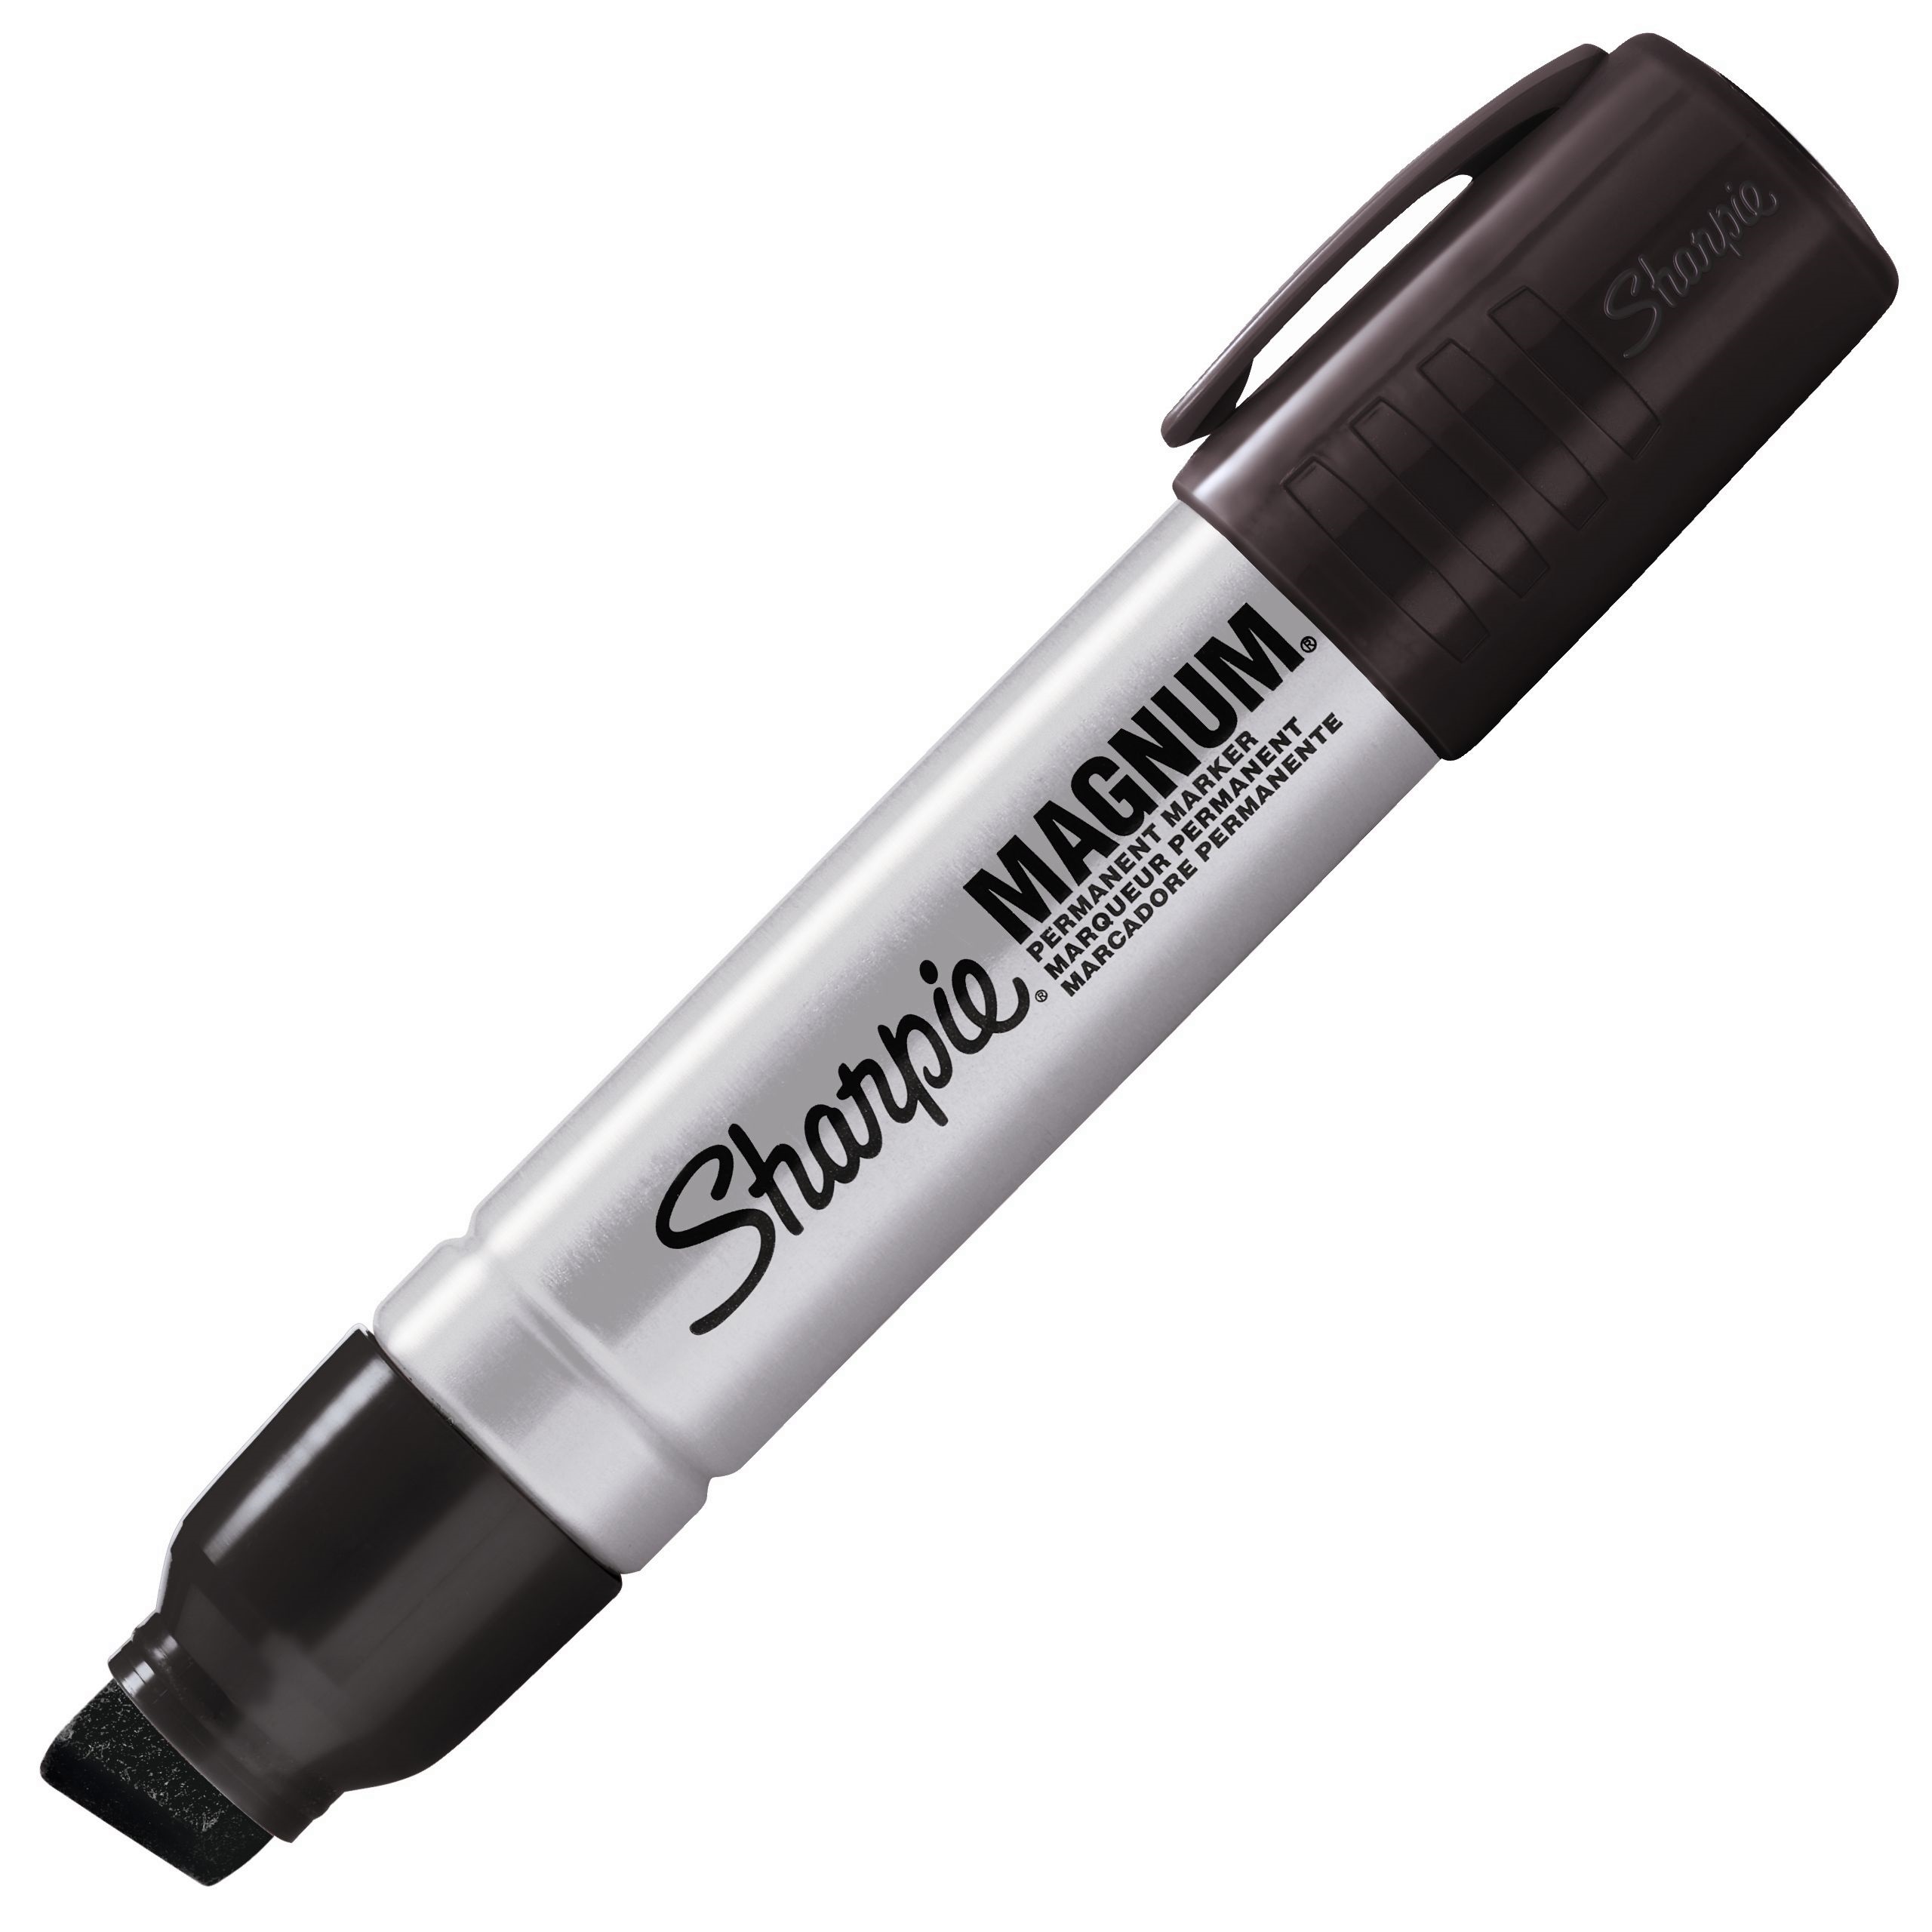 Маркер беру. Маркер перманентный 1-5 мм, черный, скошенный, Crown "Multi Marker Chisel", 207895. Перманентные маркеры Sharpie. Permanent Marker Ink u45130 2.5гр. Маркер Sharpie черный 4 мм.